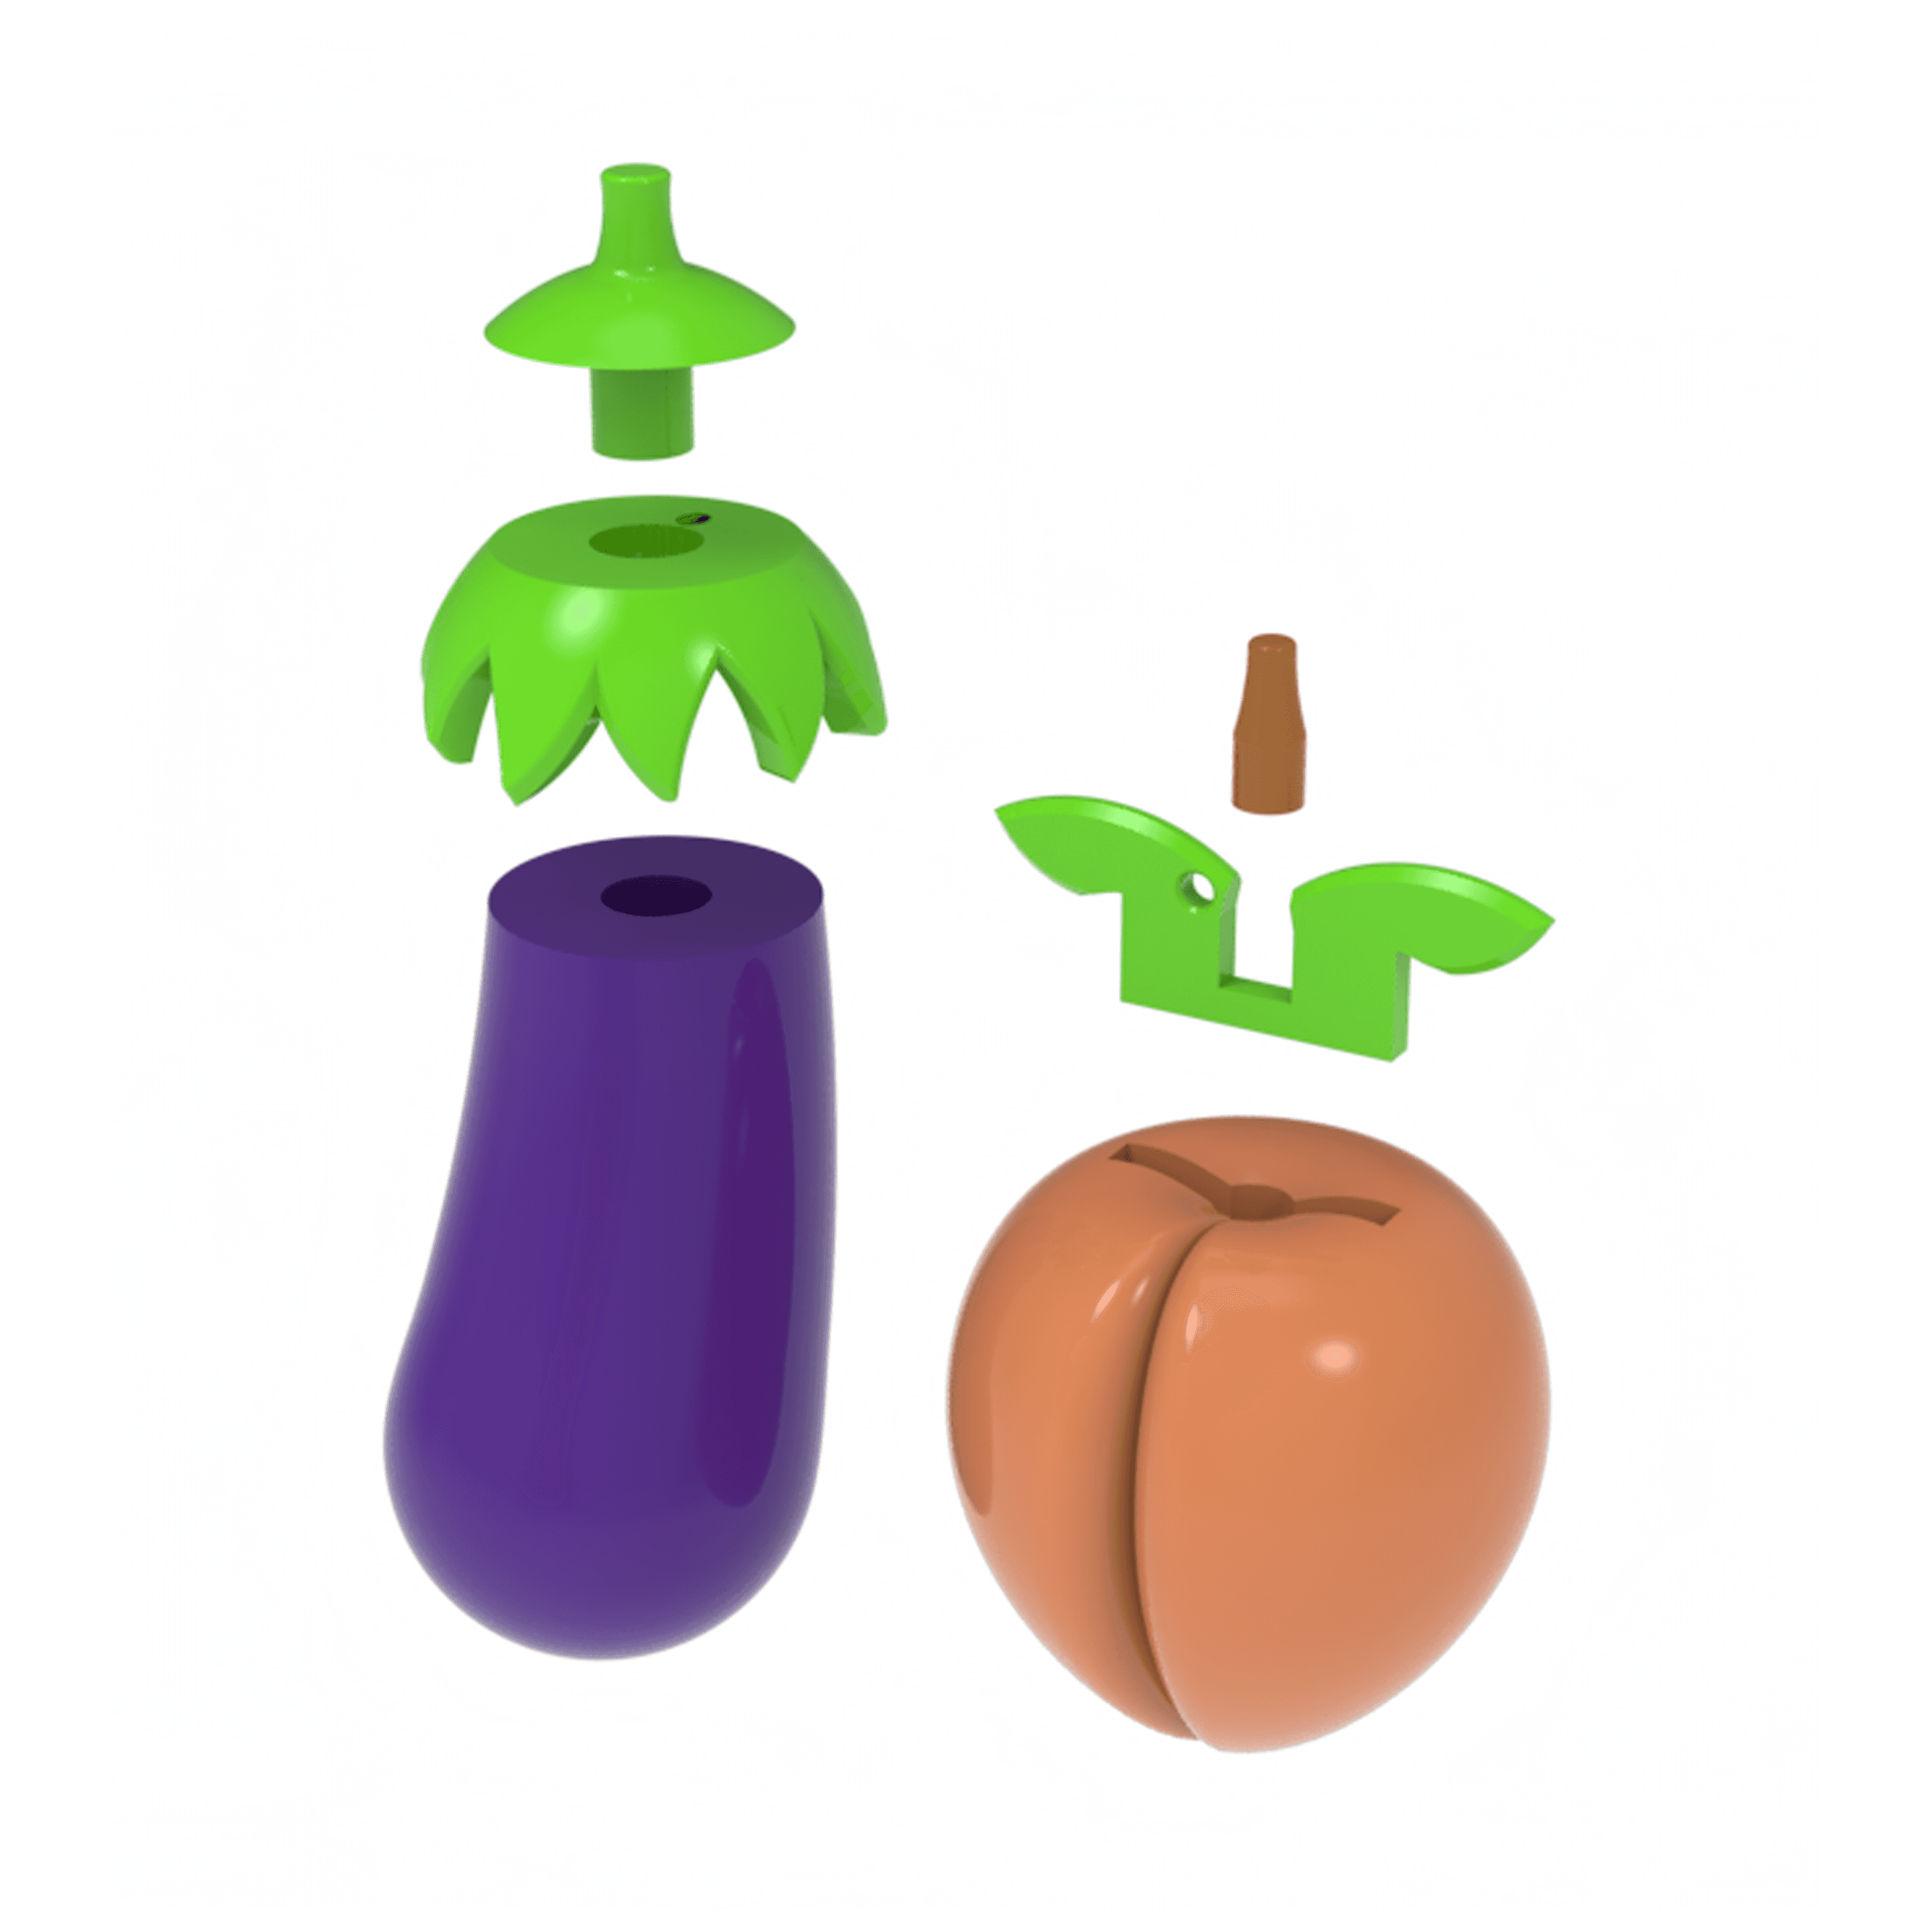 Peach and Eggplant Keychain / Earrings 3d model